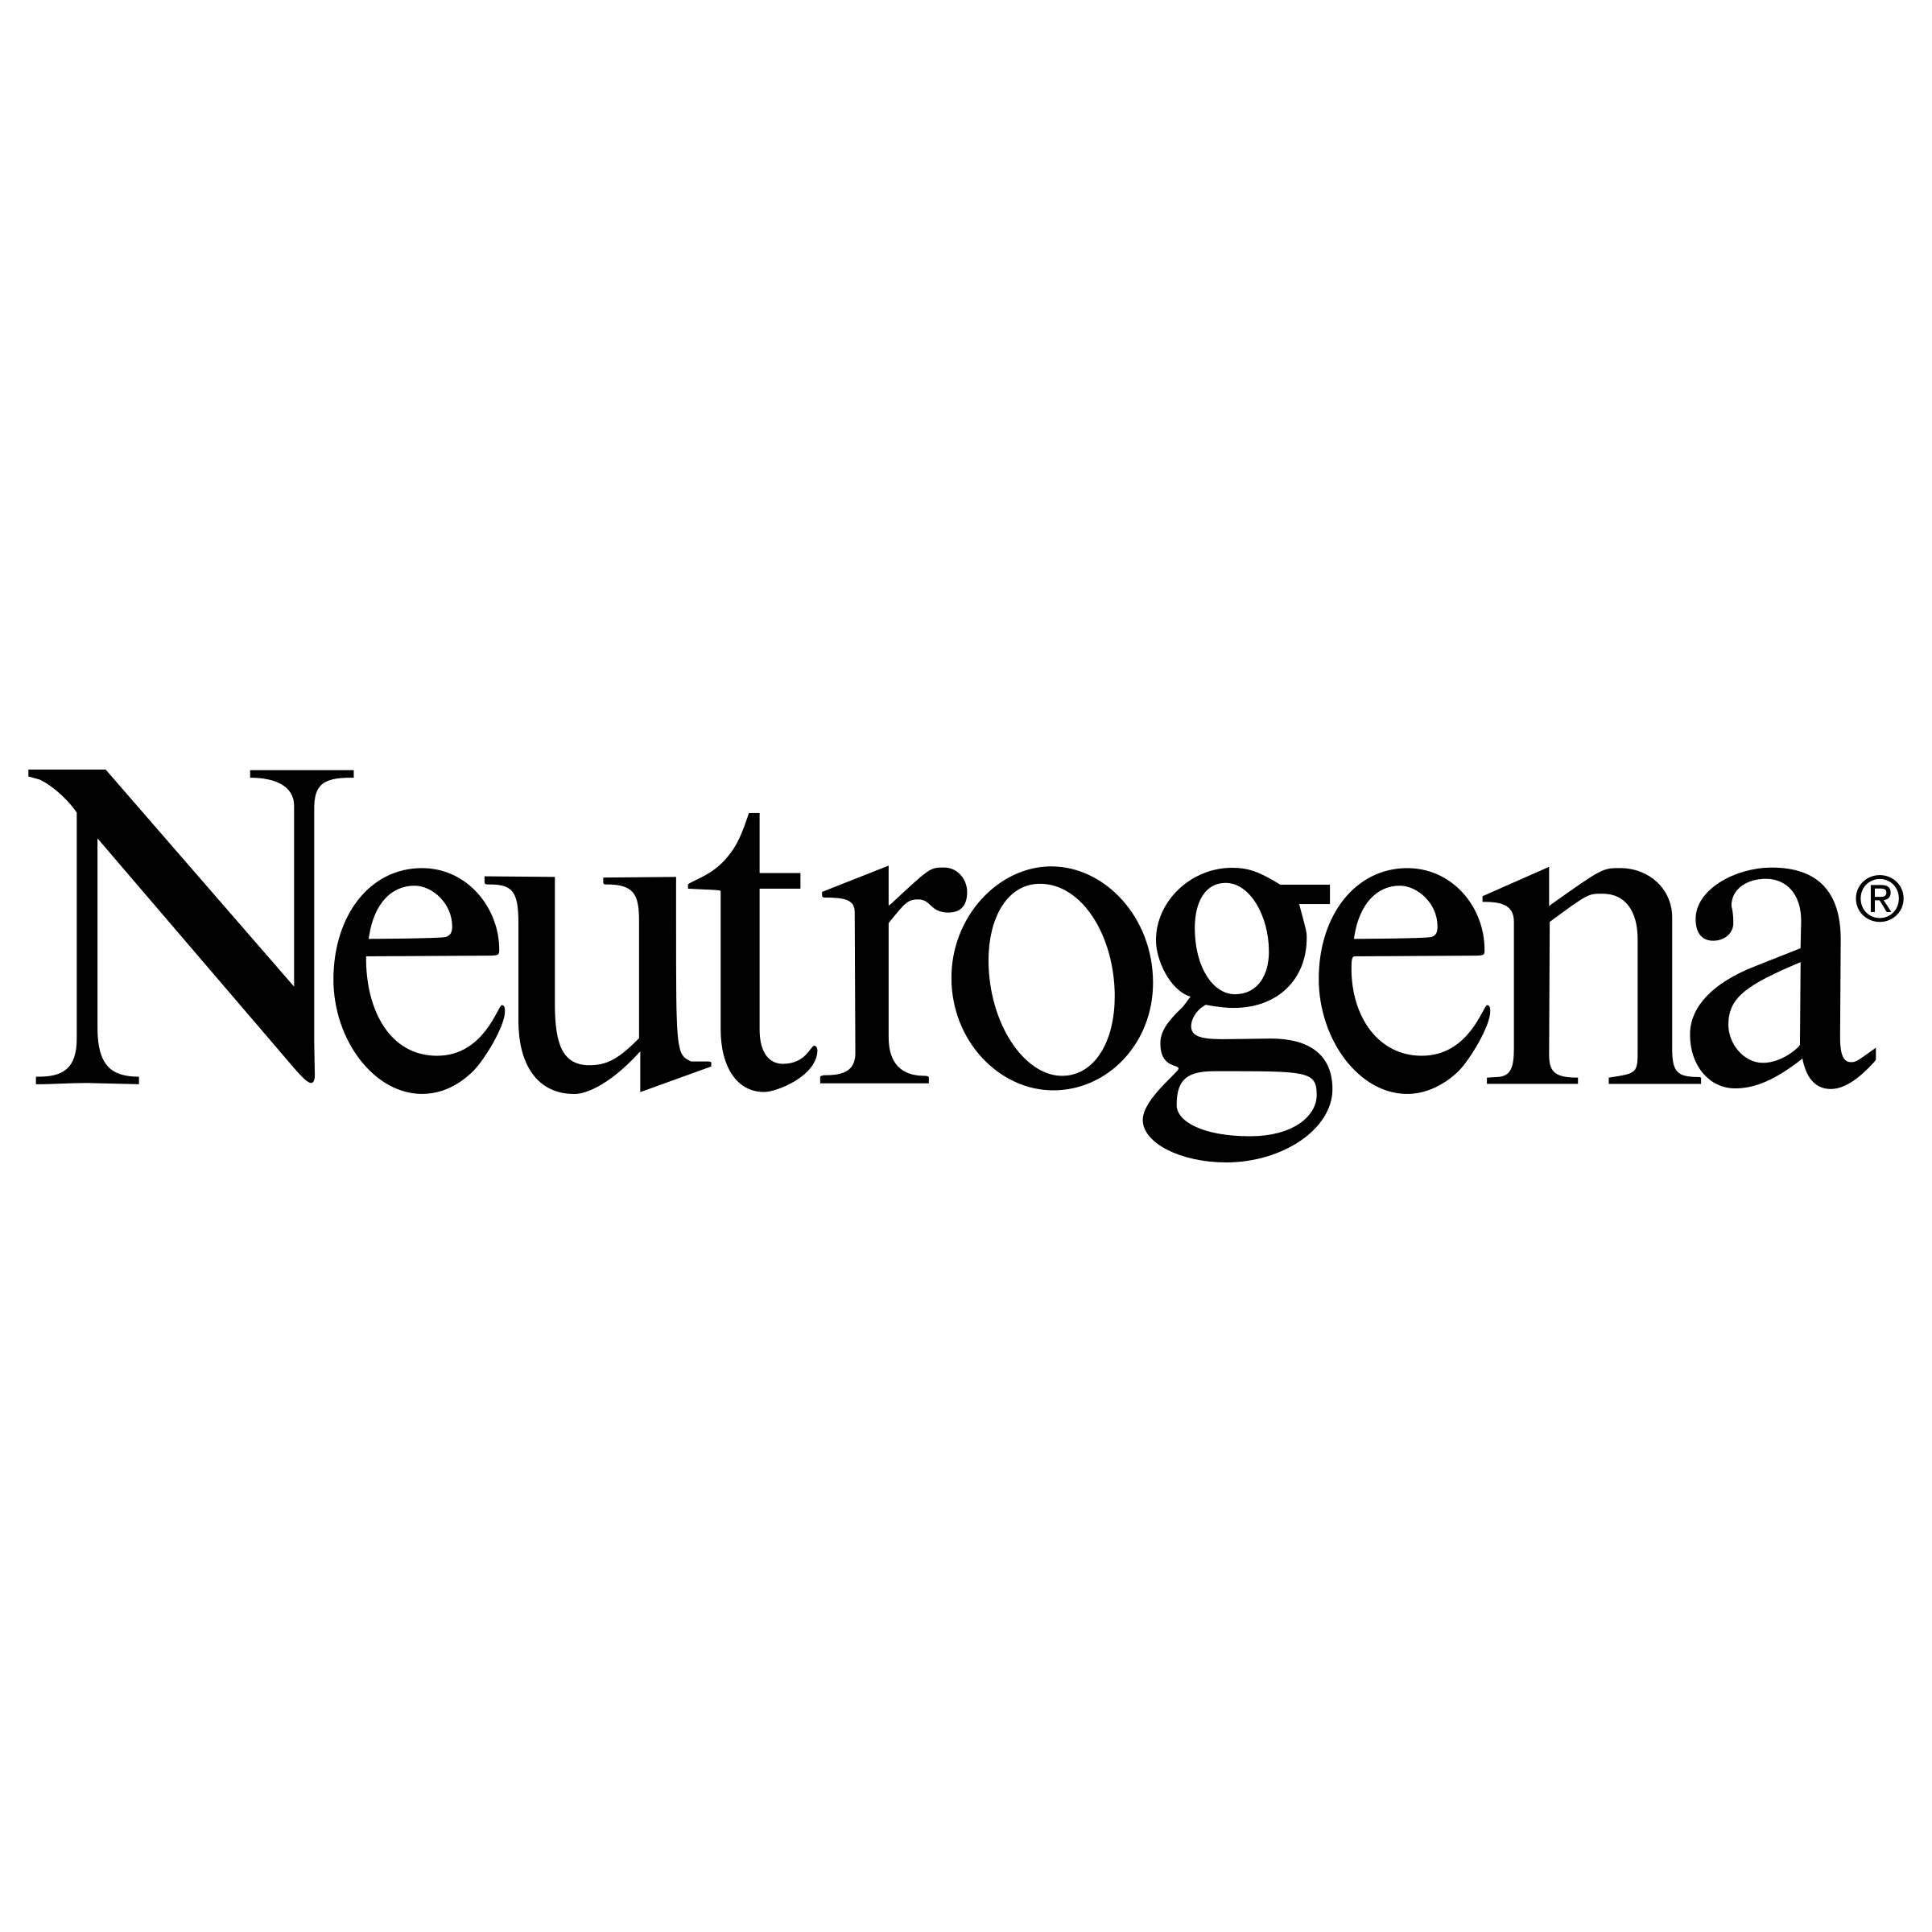 neutrogena-1-logo-png-transparent